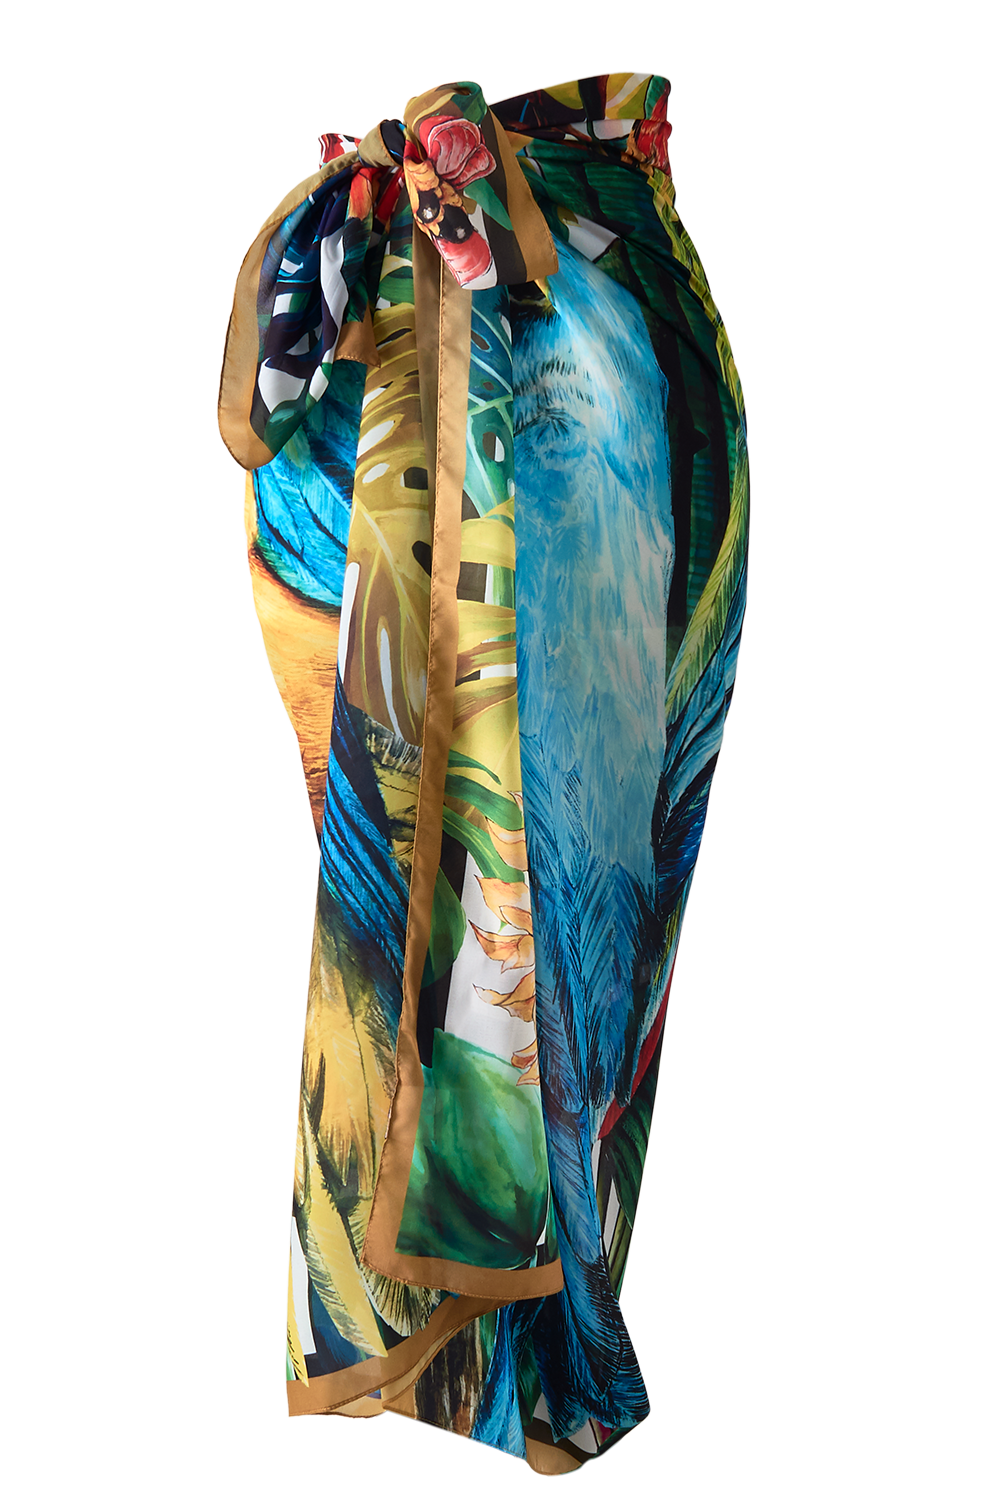 Max lenço Araras do Brasil em mousseline de poliéster | 130x130cm